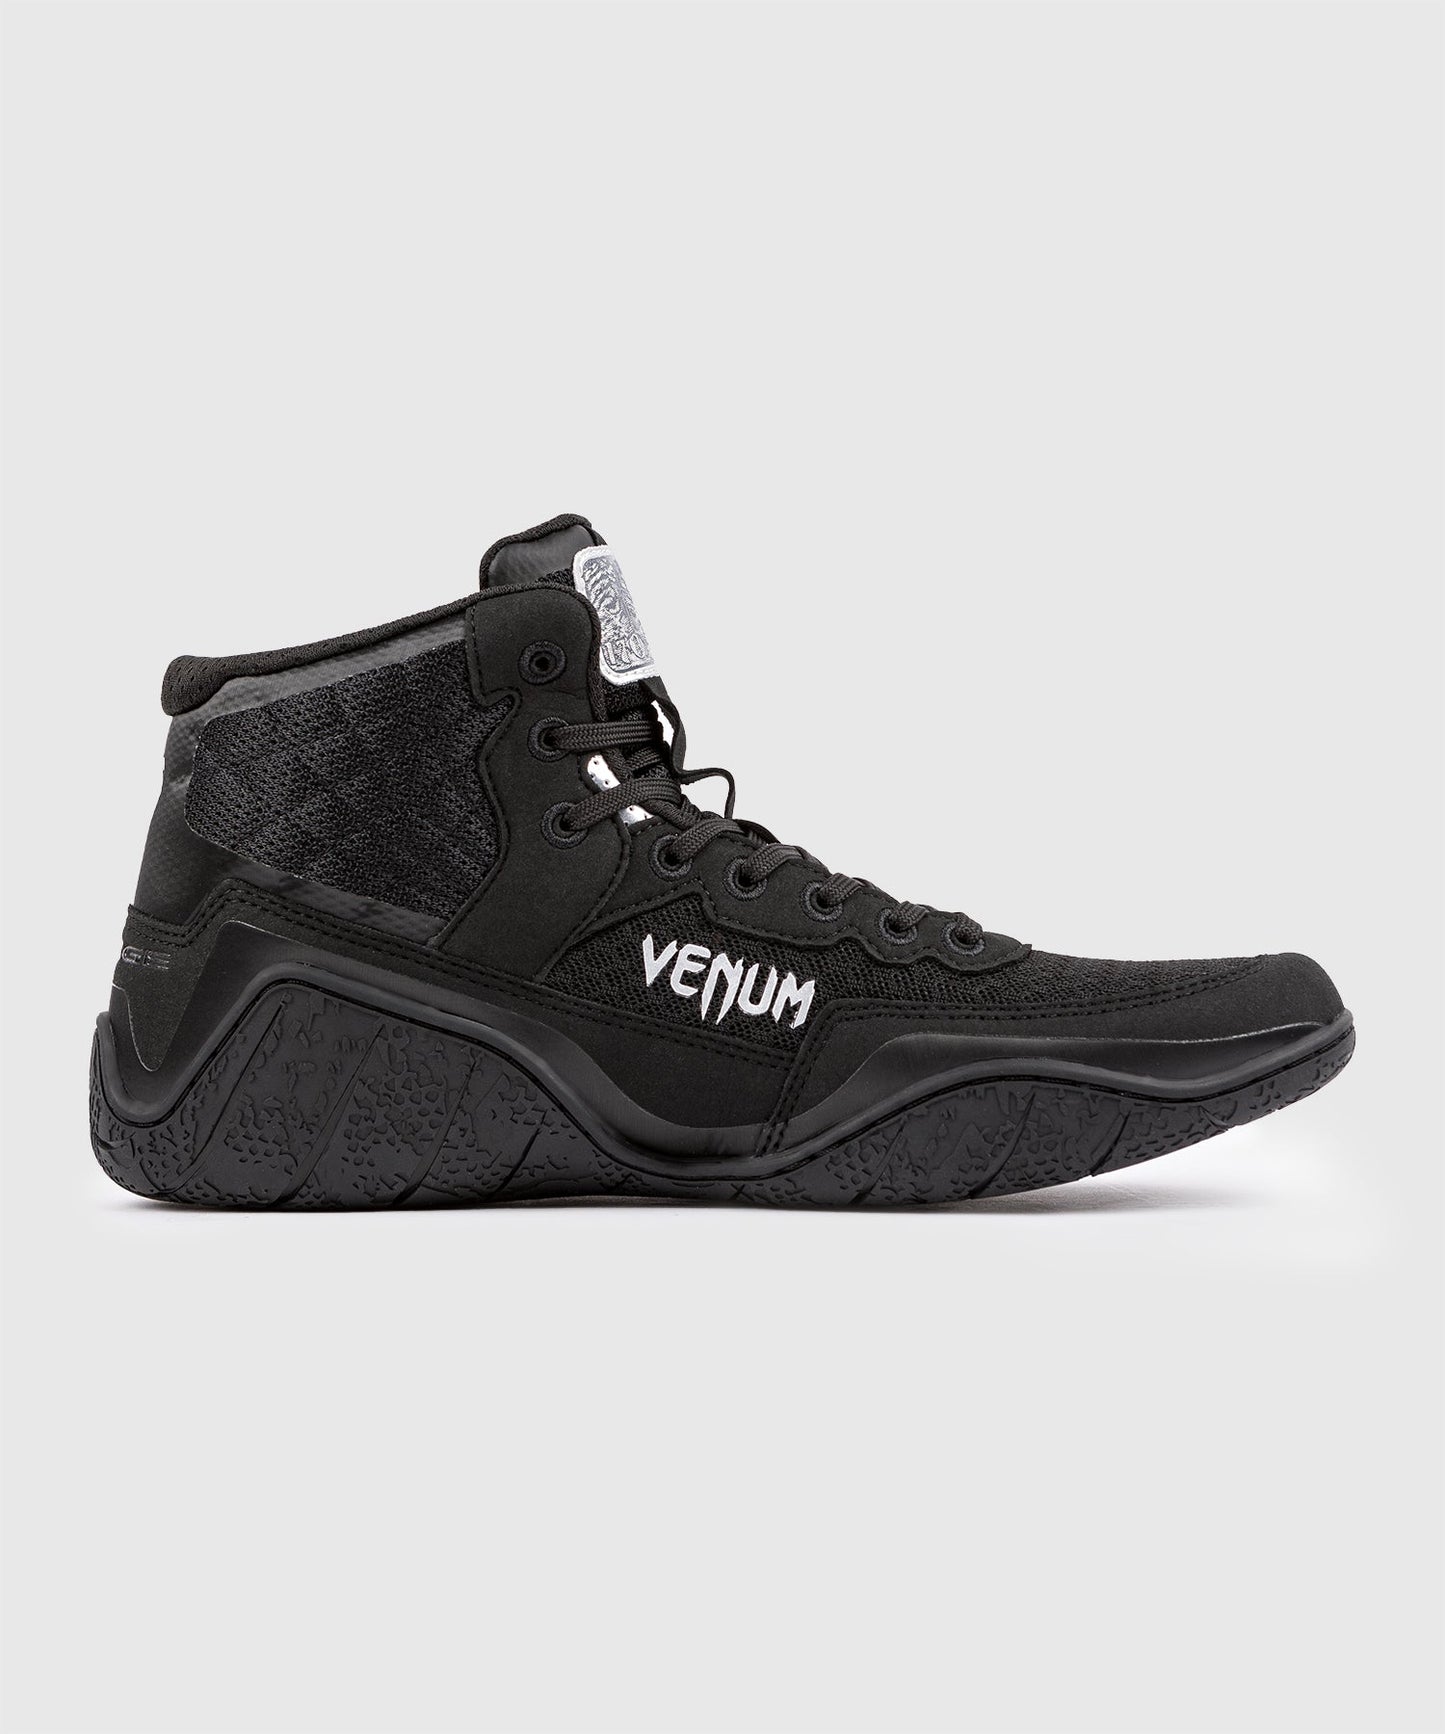 Venum X Dodge Demon 170 Wrestling shoes - Black